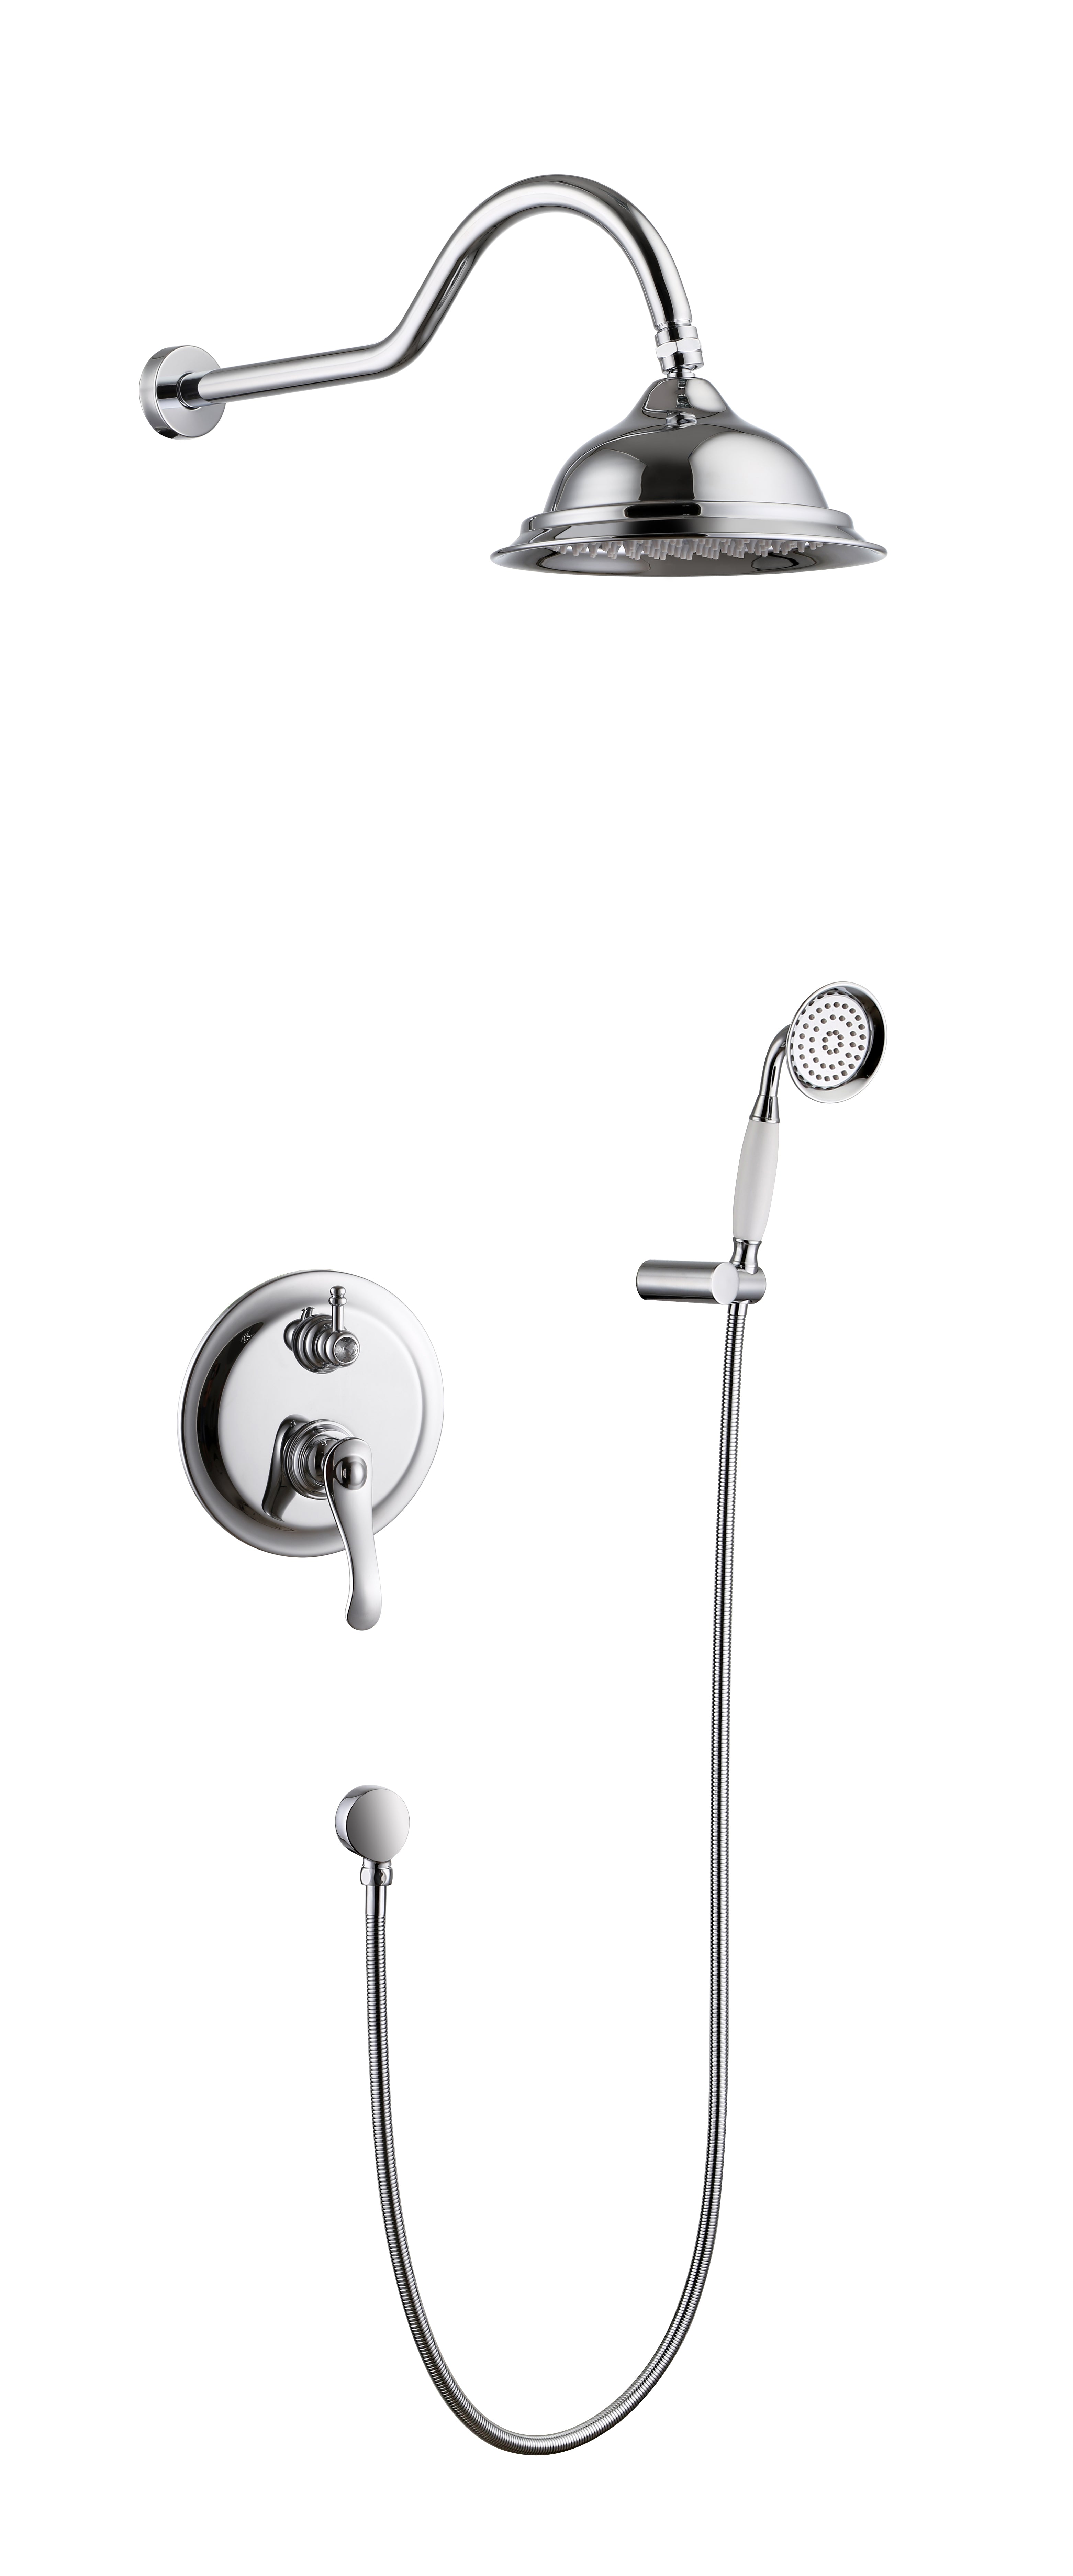 964701 Chrome Round shower with Handheld shower set